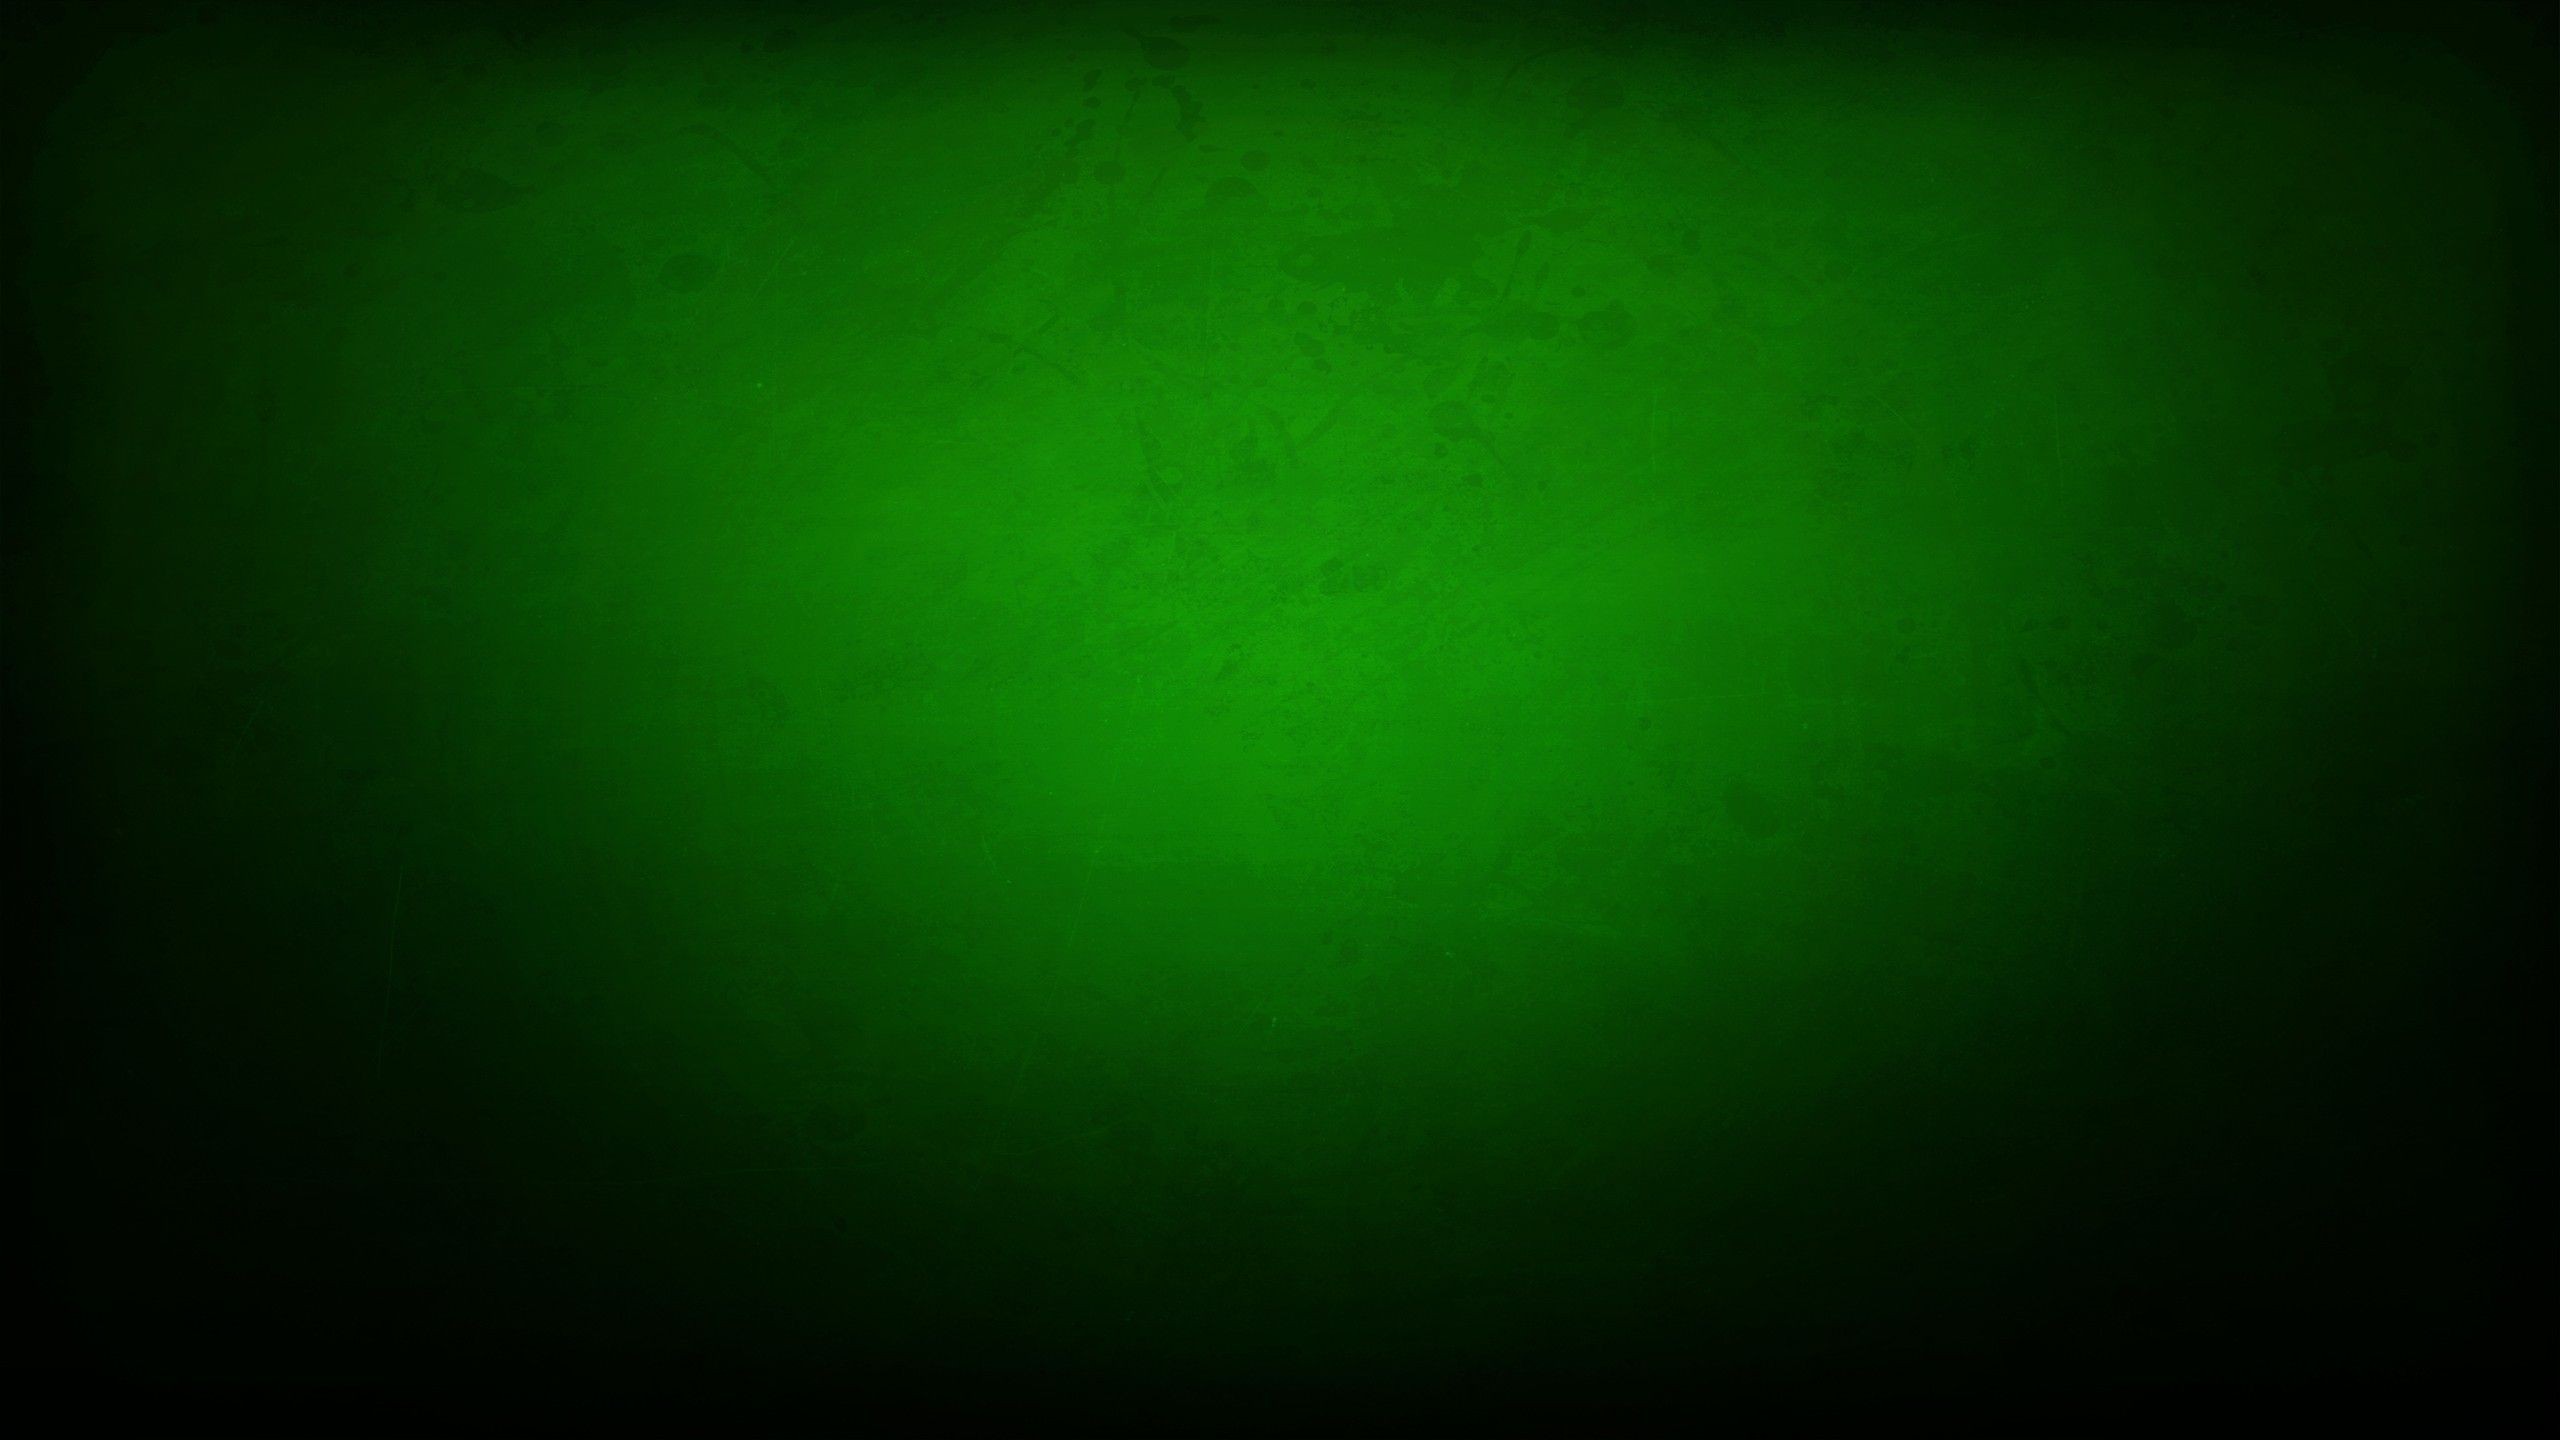 Green Grunge background ·① Download free stunning High